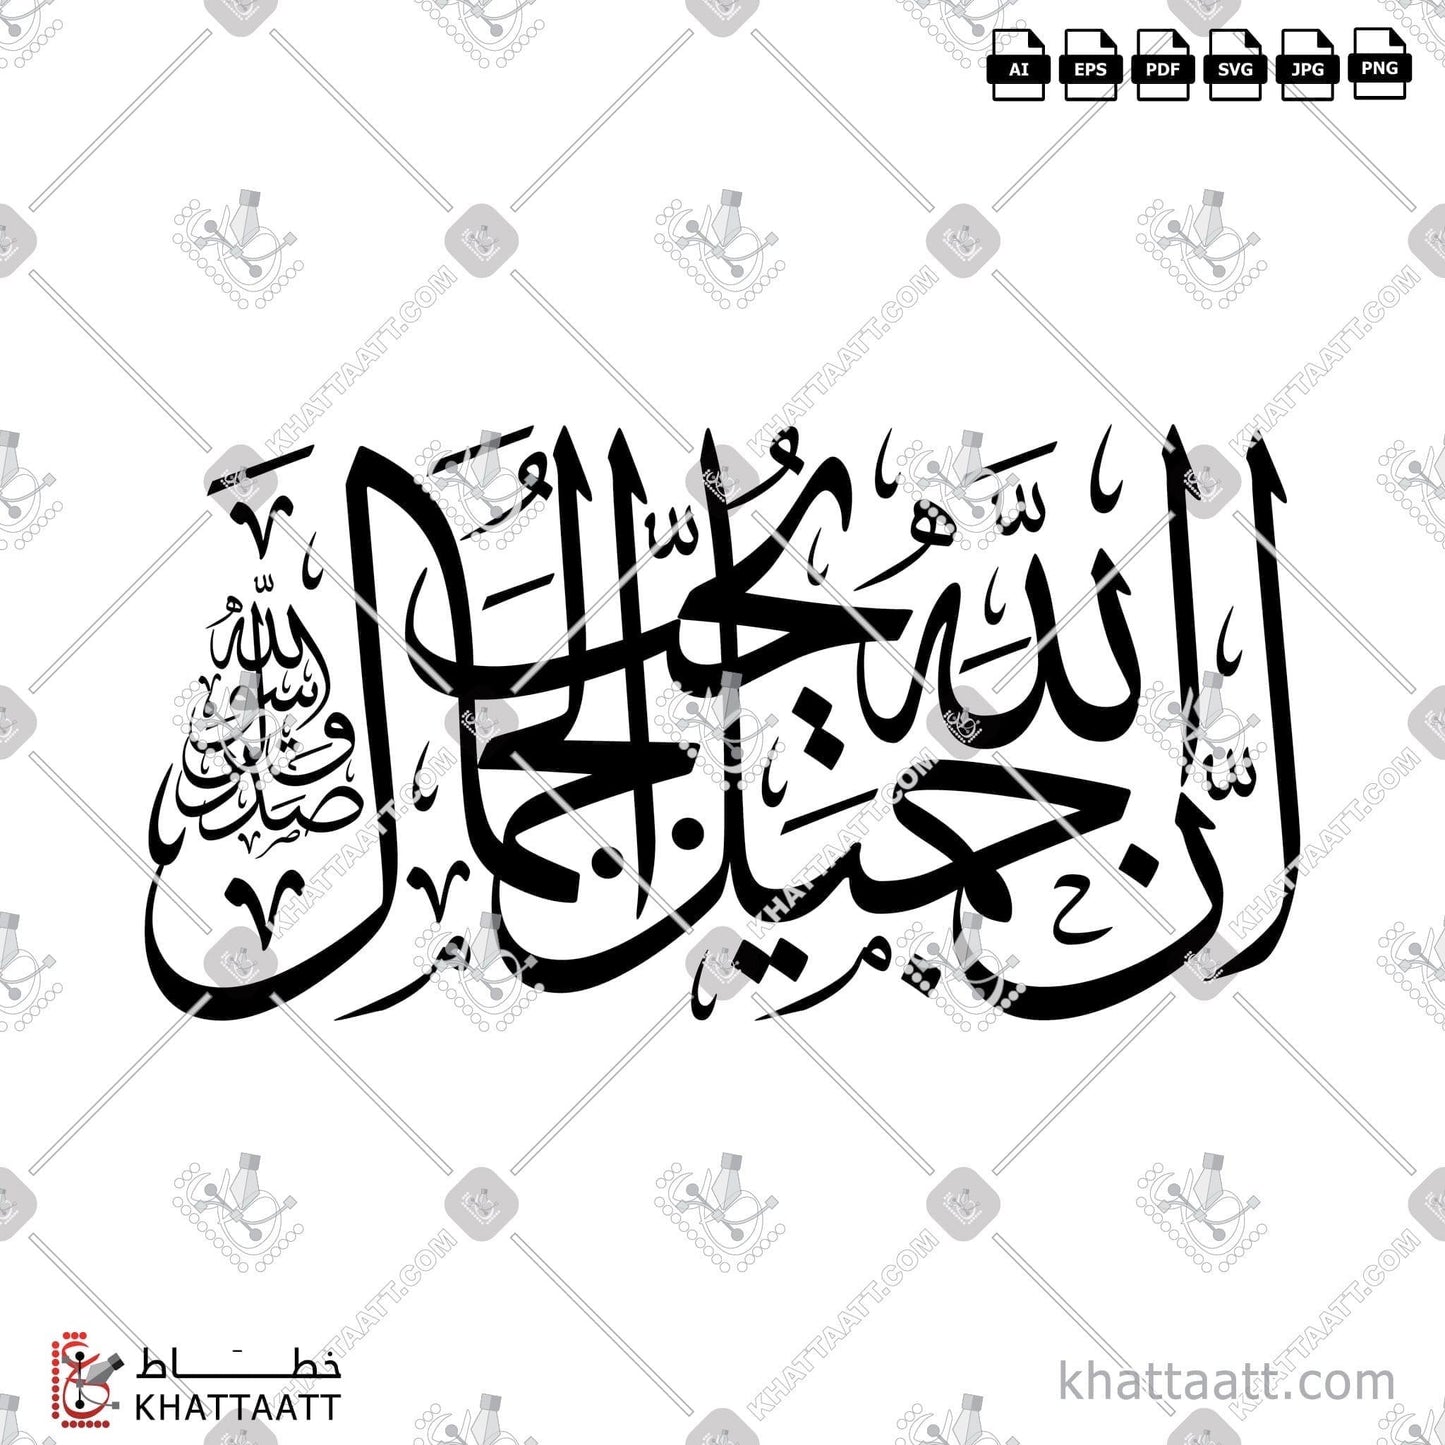 Download Arabic Calligraphy of إن الله جميل يحب الجمال in Thuluth - خط الثلث in vector and .png